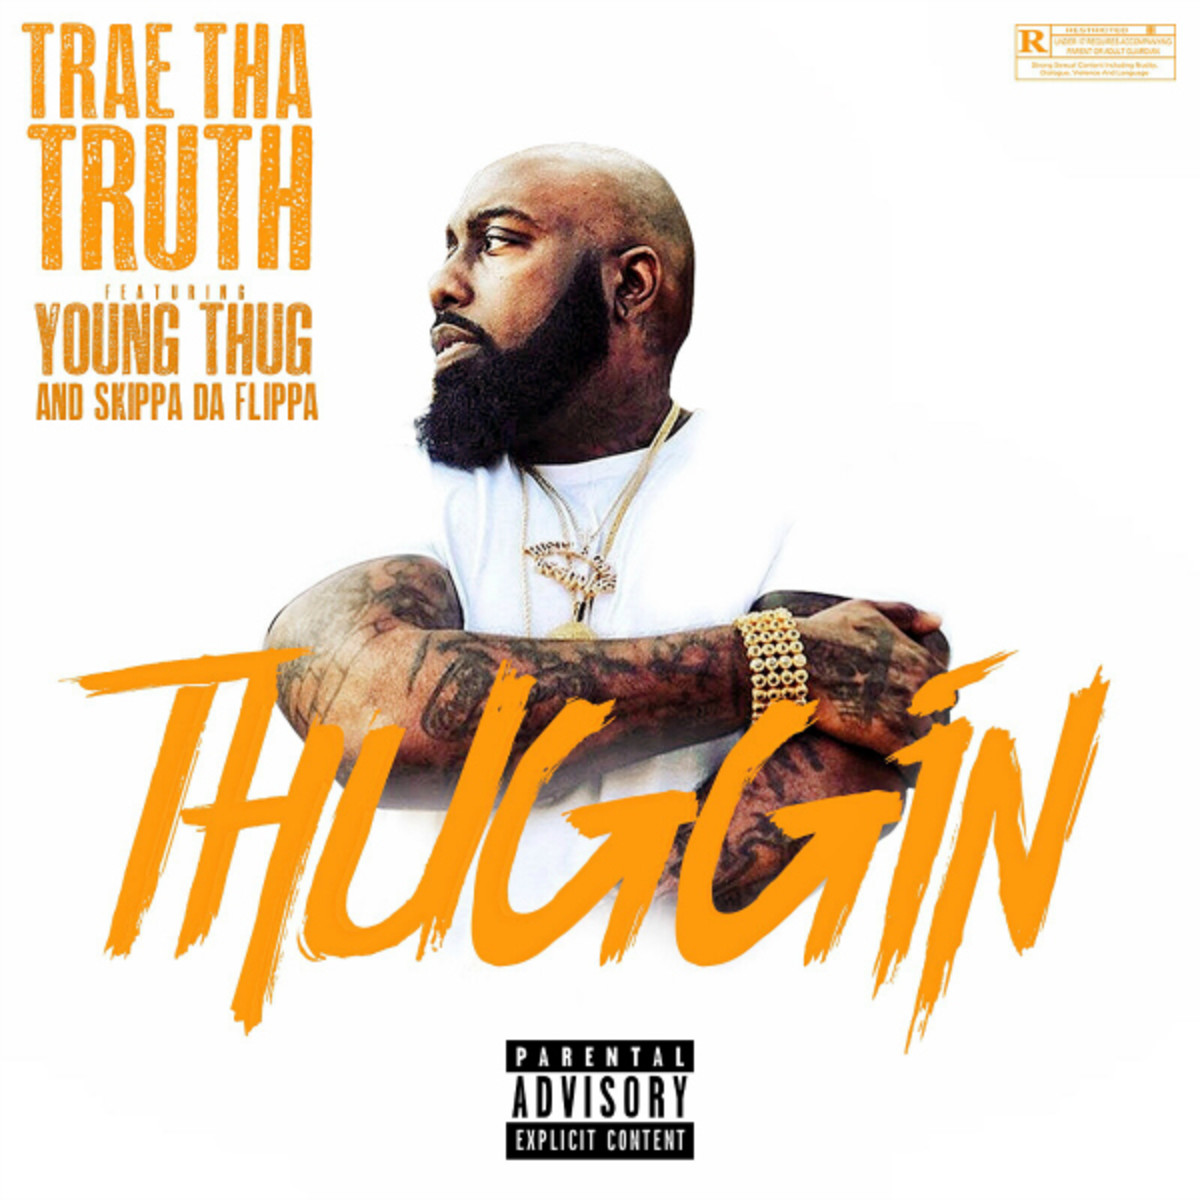 Premiere: Trae tha Truth Grabs Young Thug and Skippa Da Flippa for New Song 